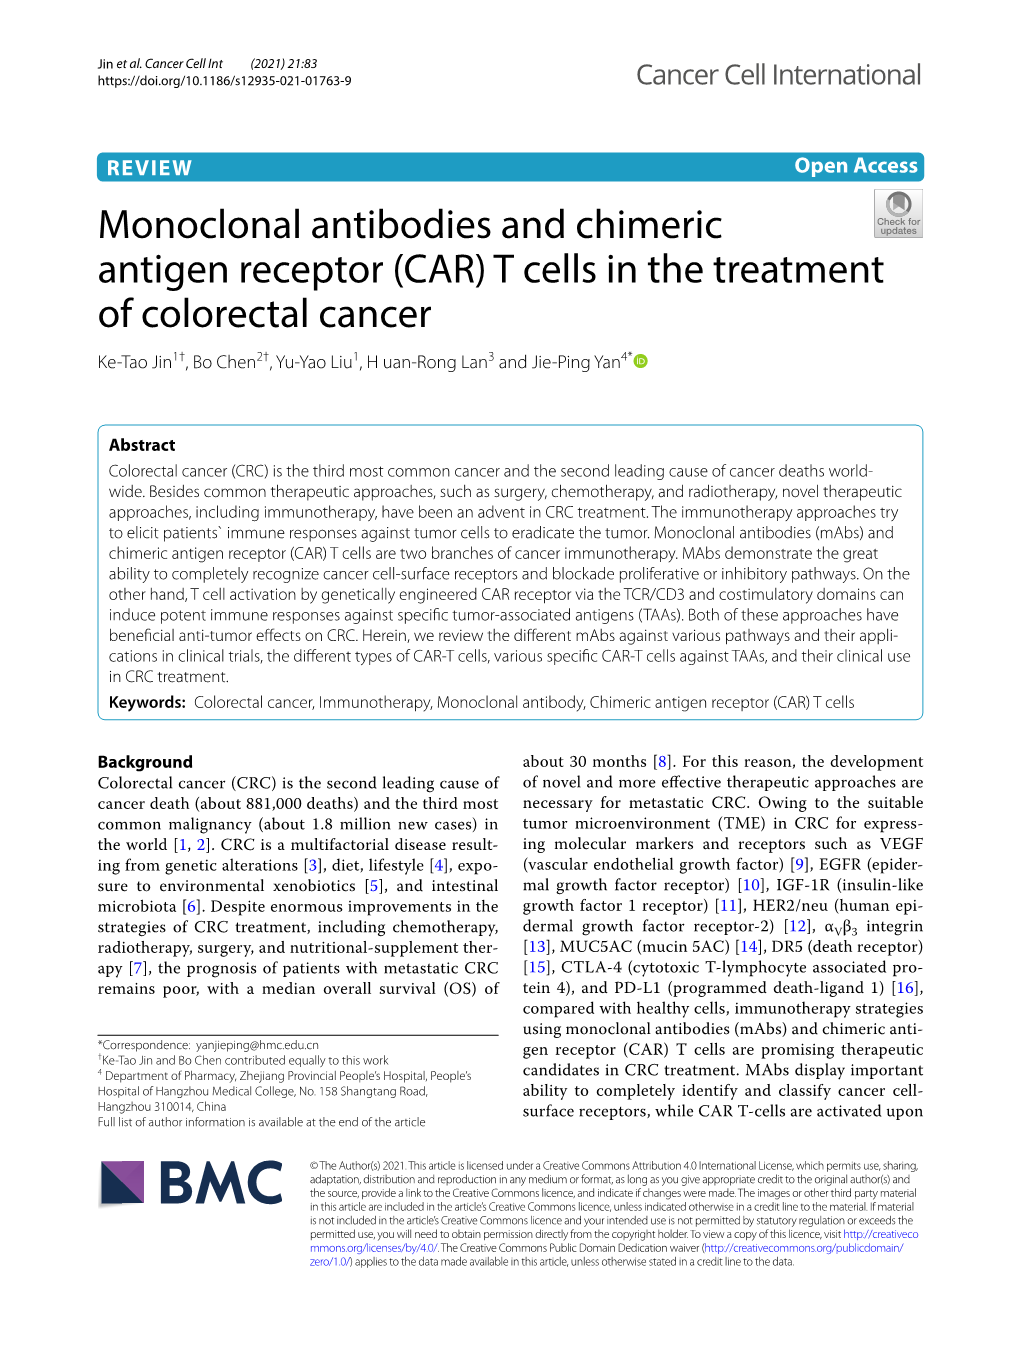 Monoclonal Antibodies and Chimeric Antigen Receptor